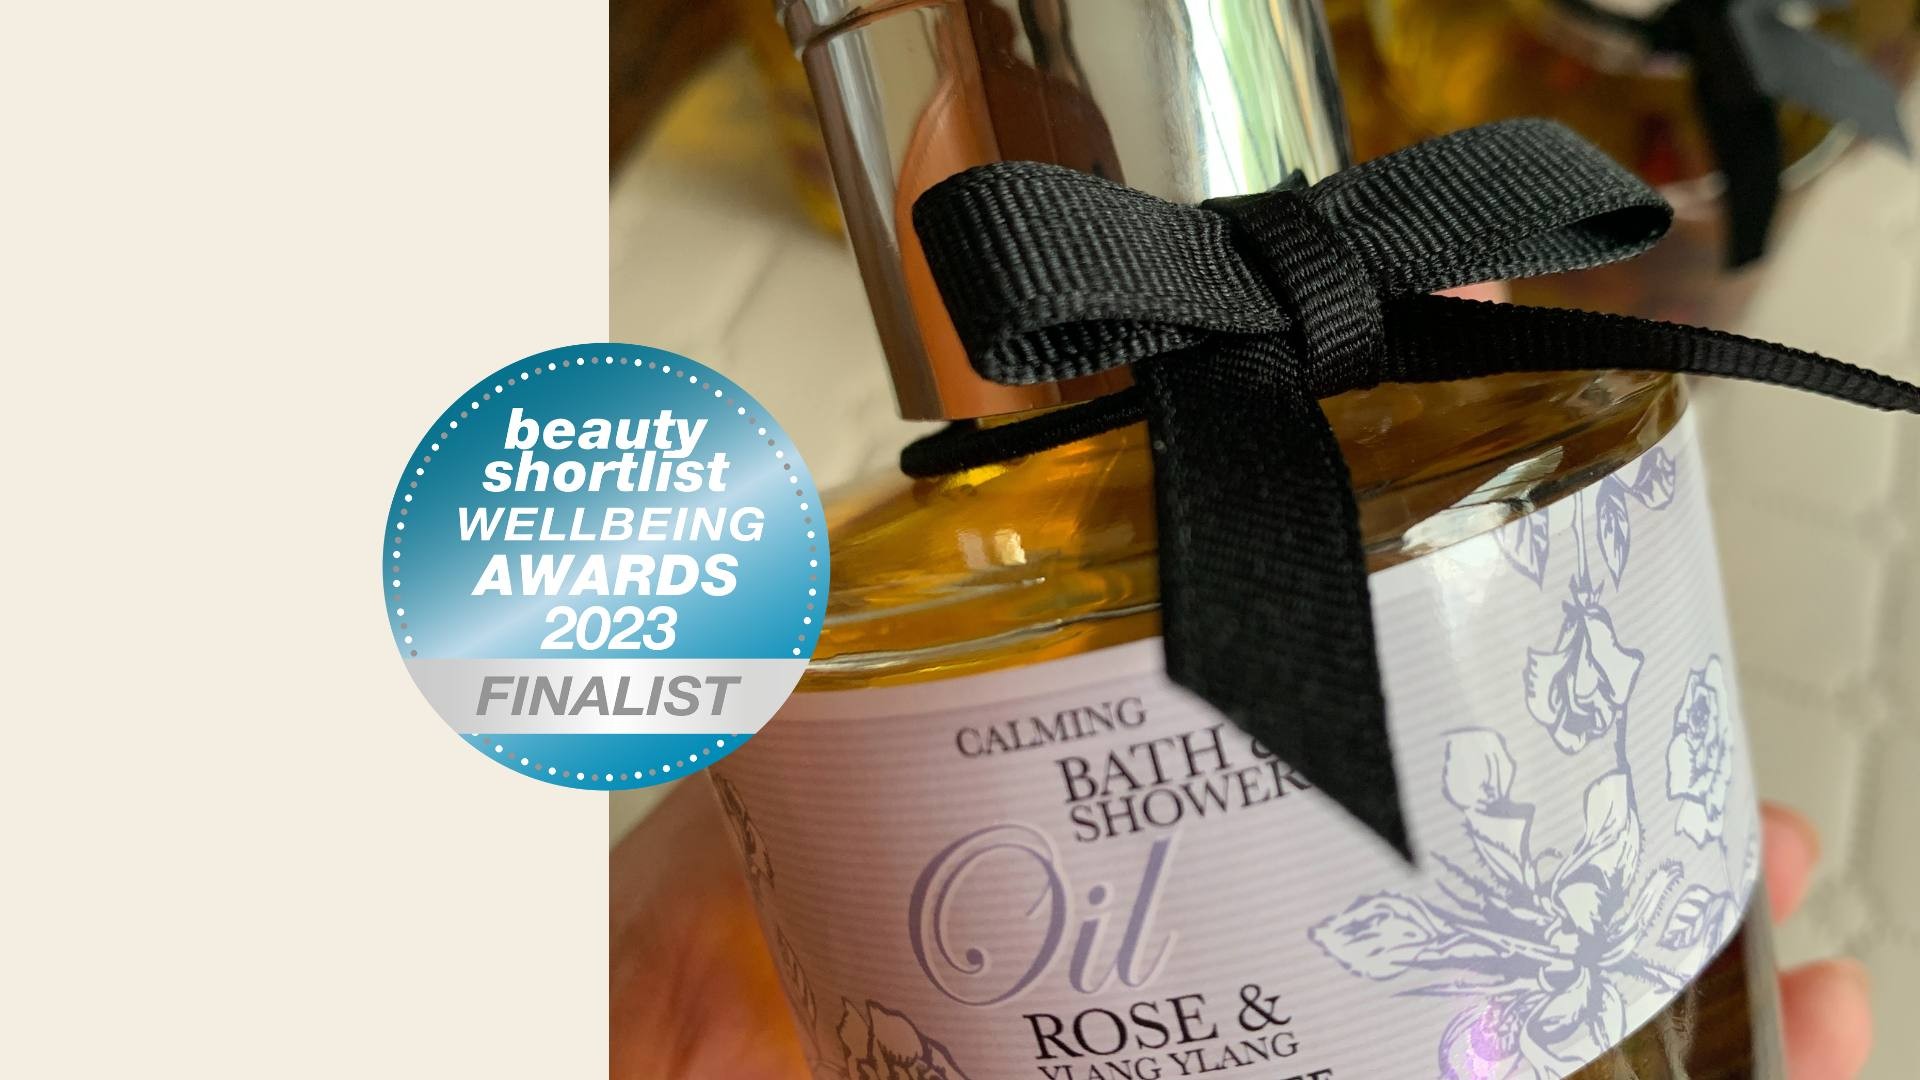 Calming Bath Oil - Green Parent Beauty Awards 2023 | The Rose Tree